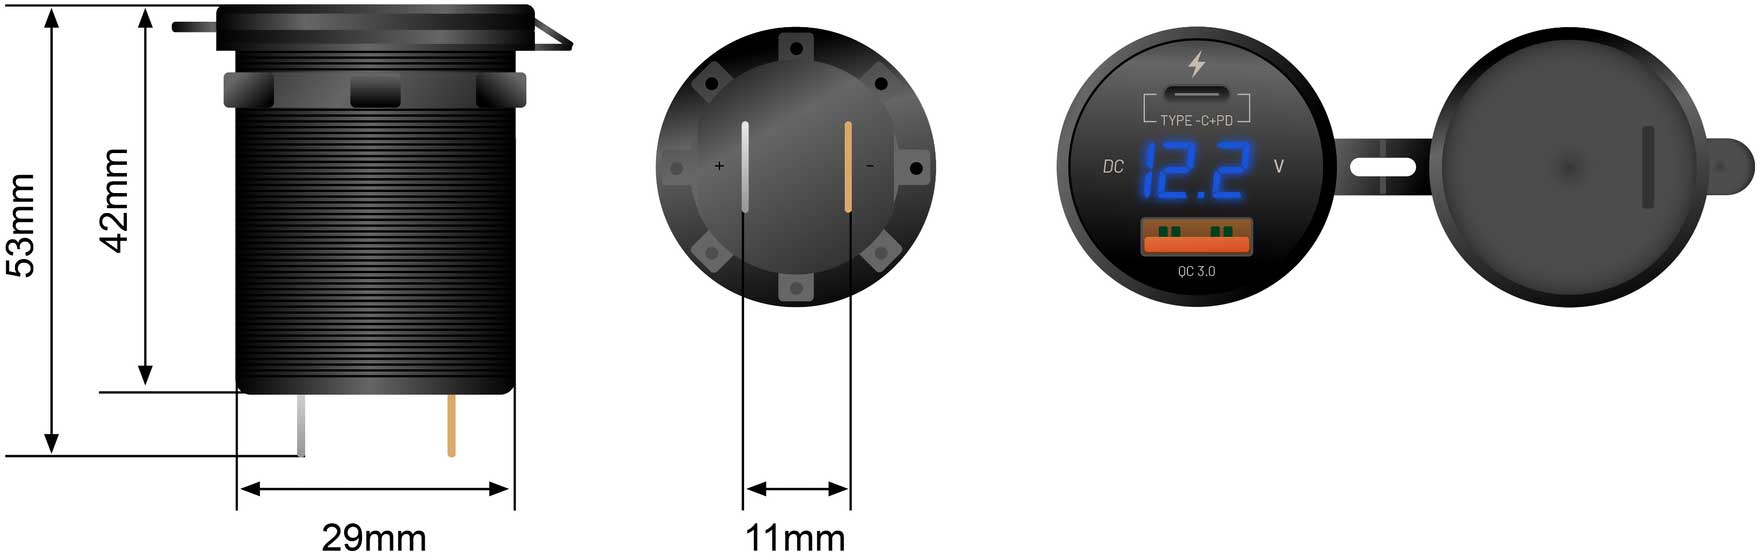 STEDI USB C Volt Meter Flush Mount dimensions